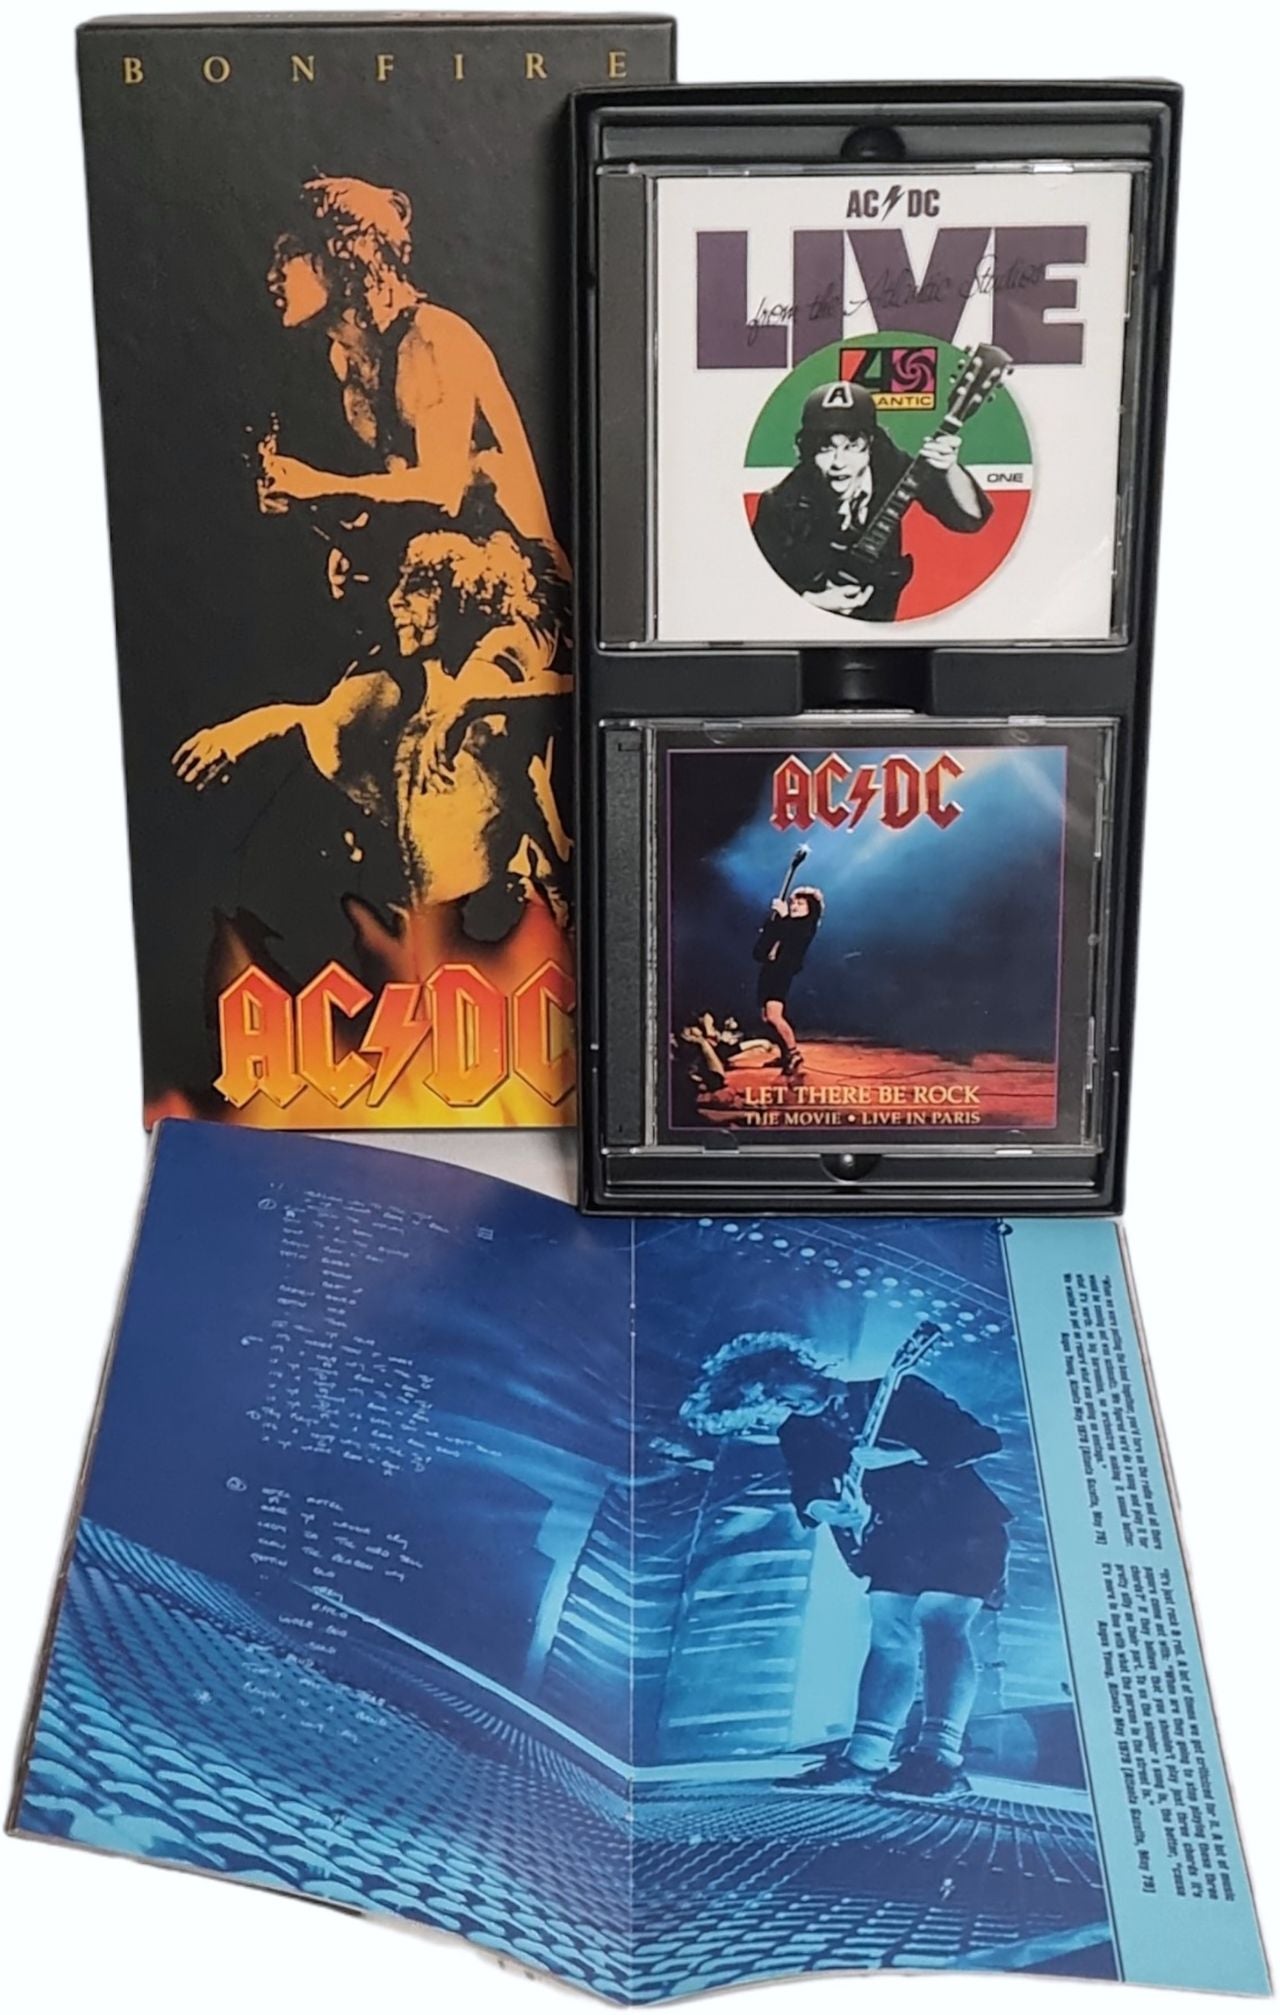 AC/DC Bonfire - 5 Box Cd album box set RareVinyl.com